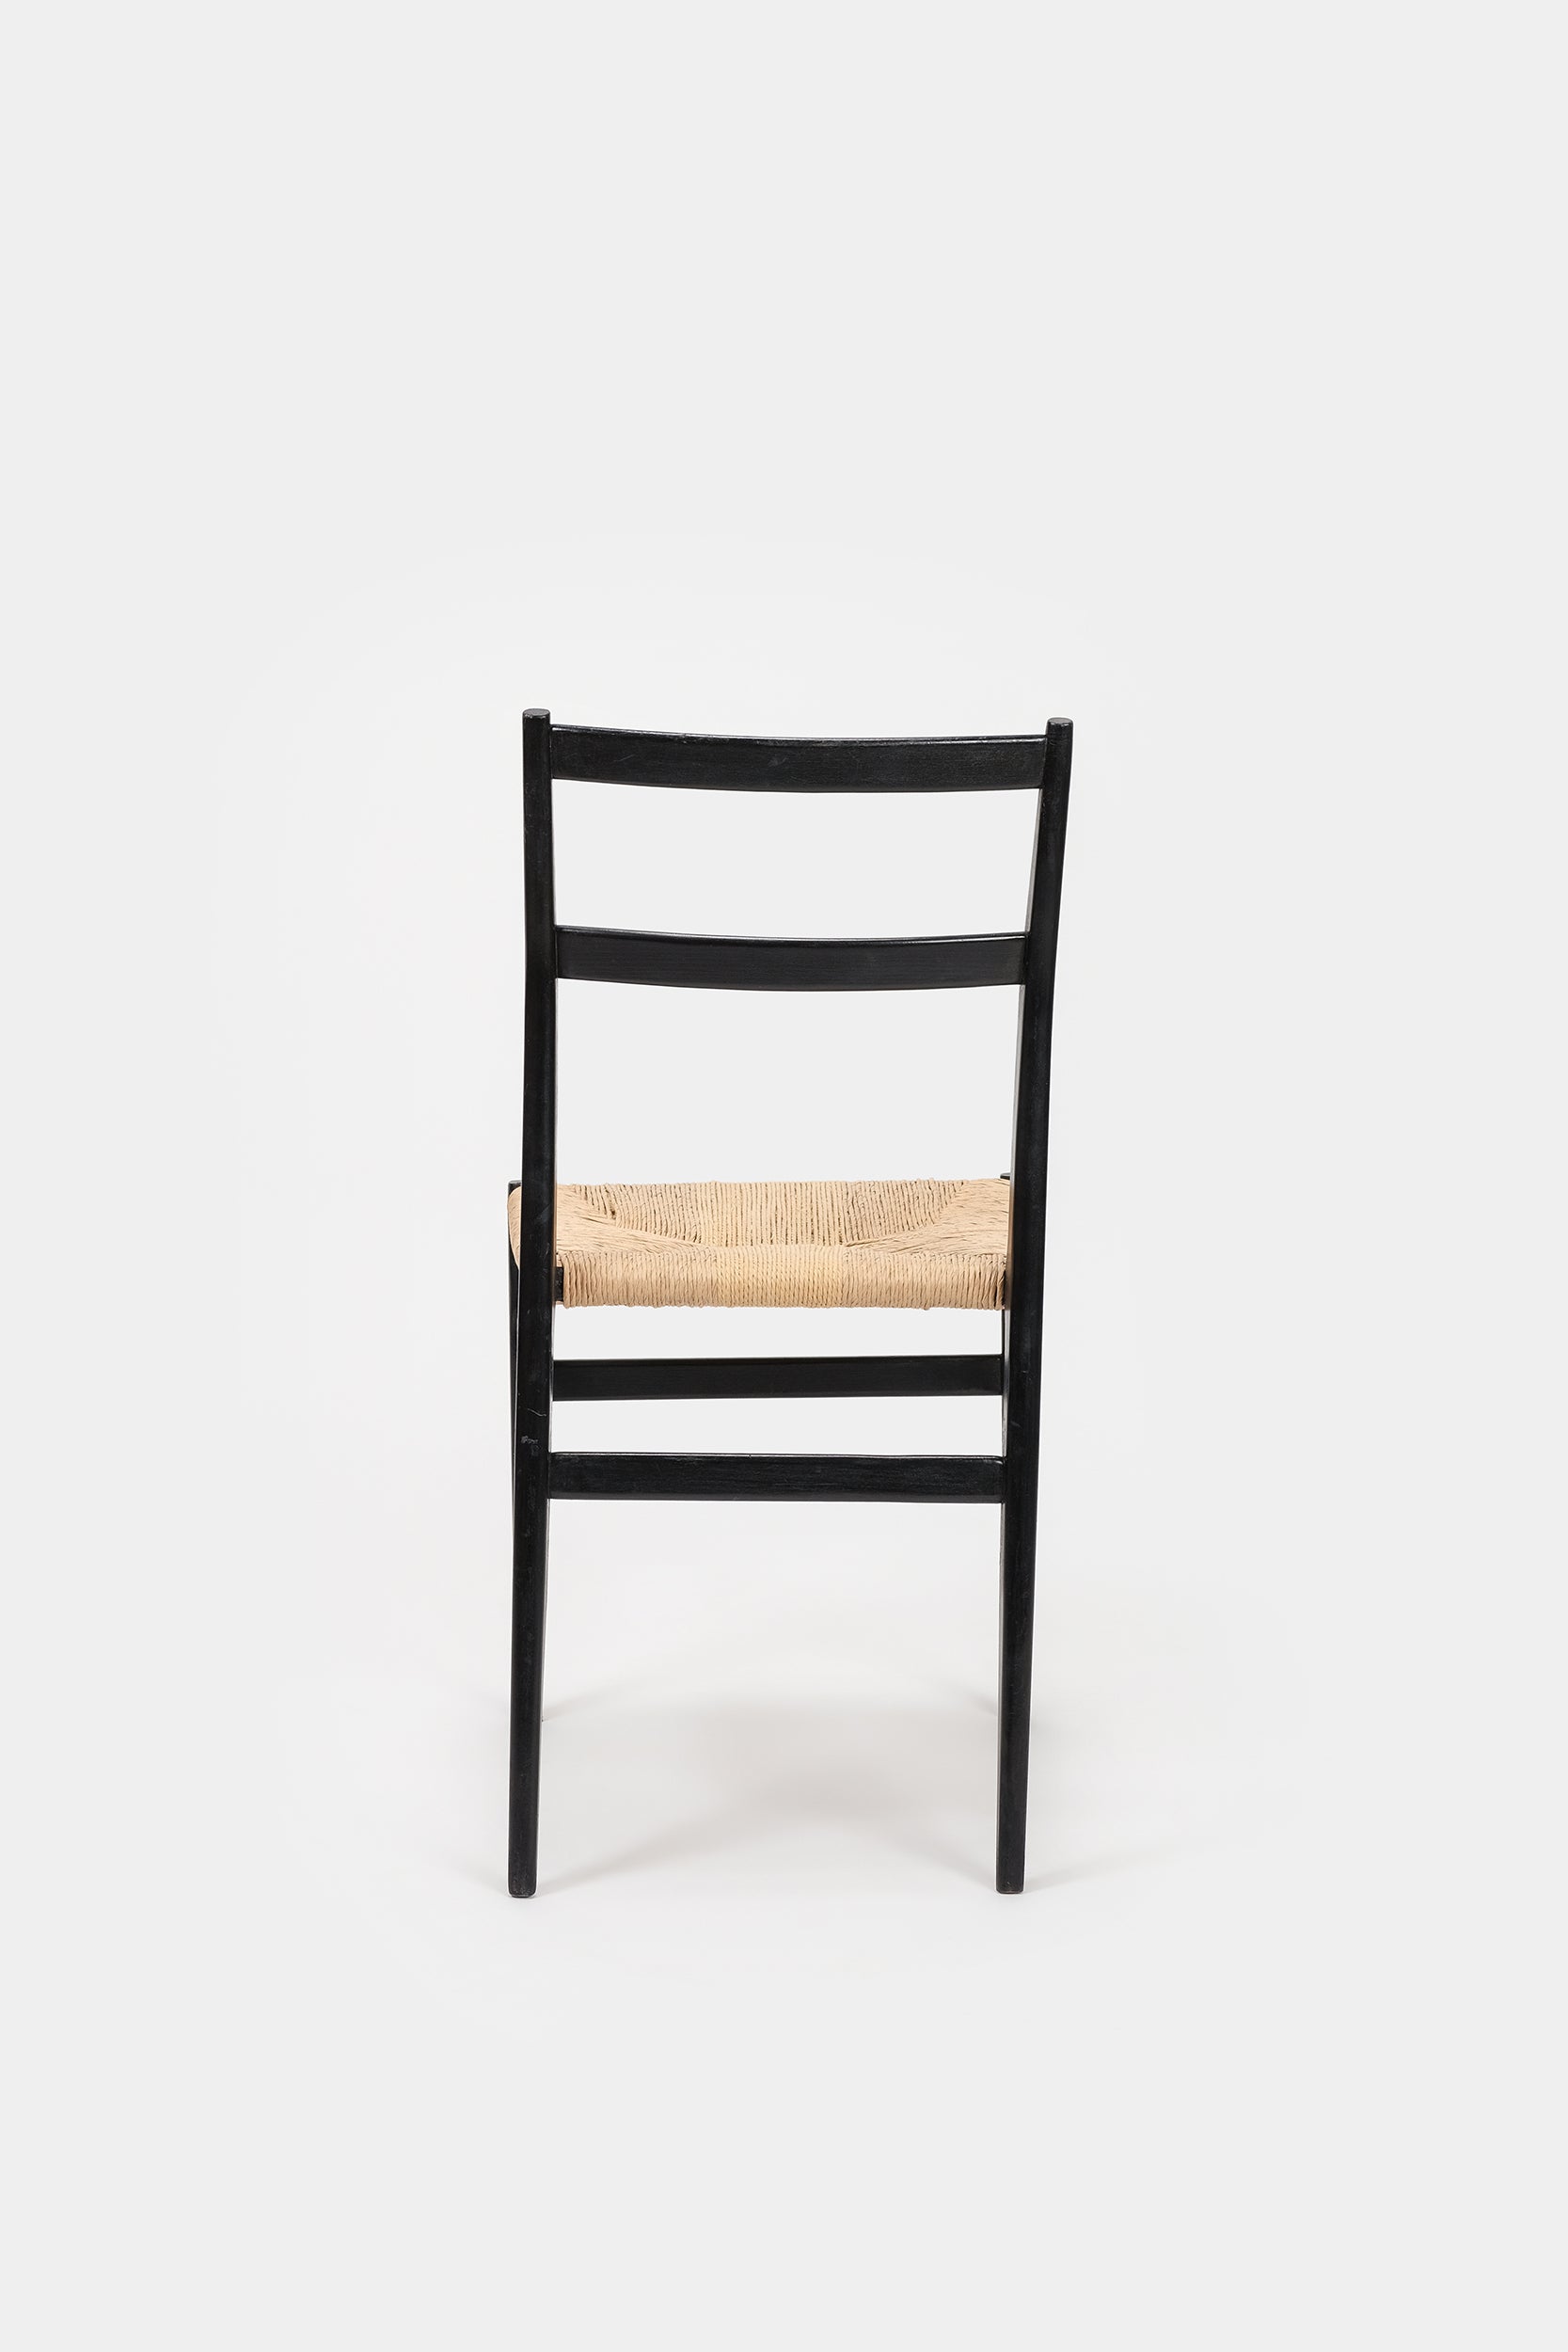 Gio Ponti, Leggera Chair with Cord Covering, Cassina, 60s